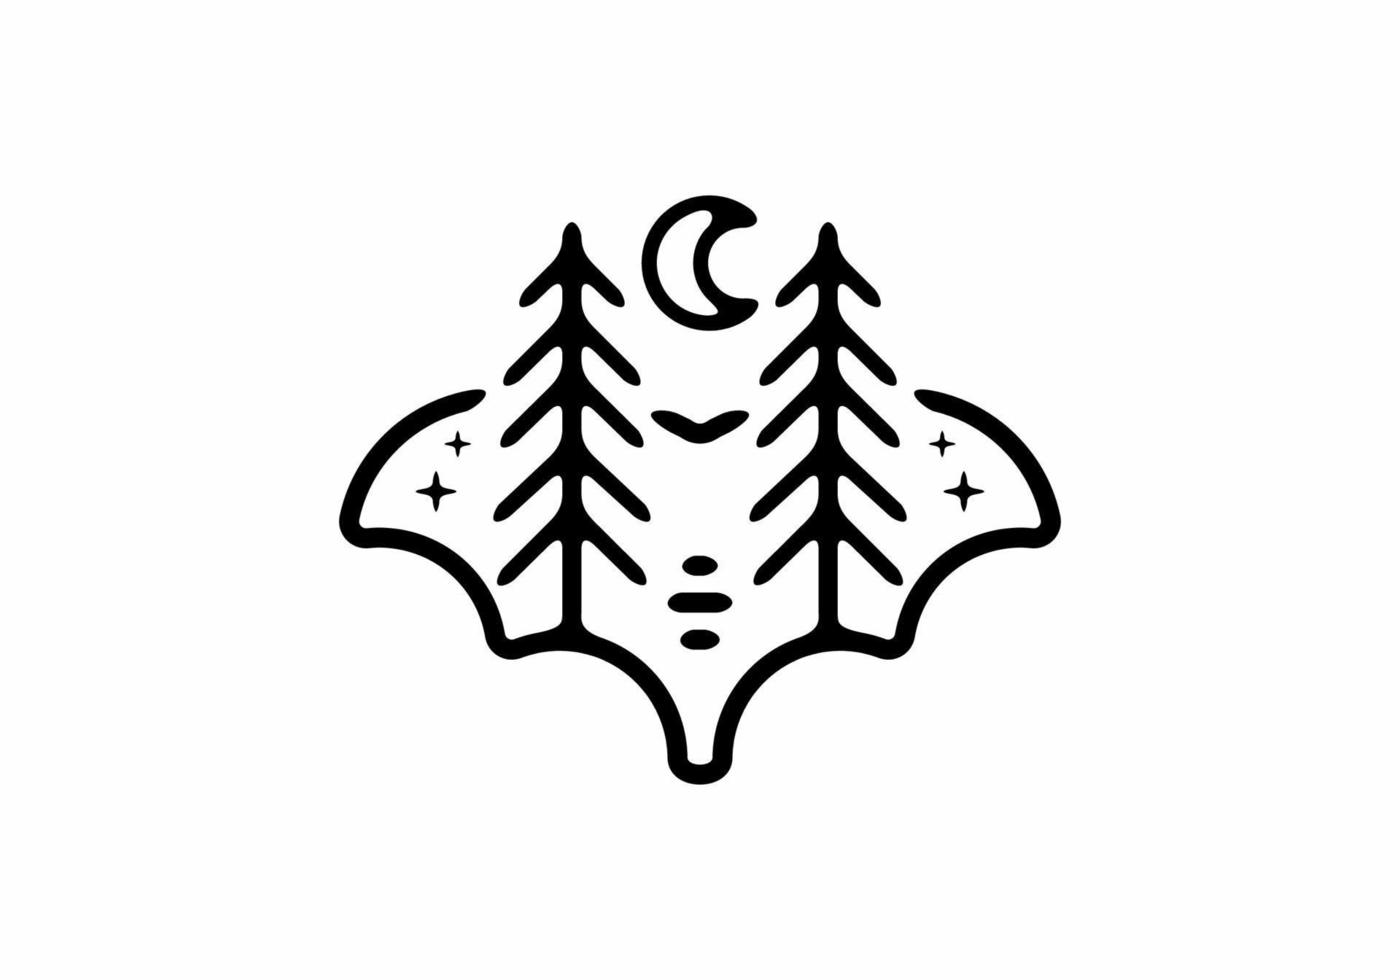 Line art pine trees in bat shape illustration tattoo vector